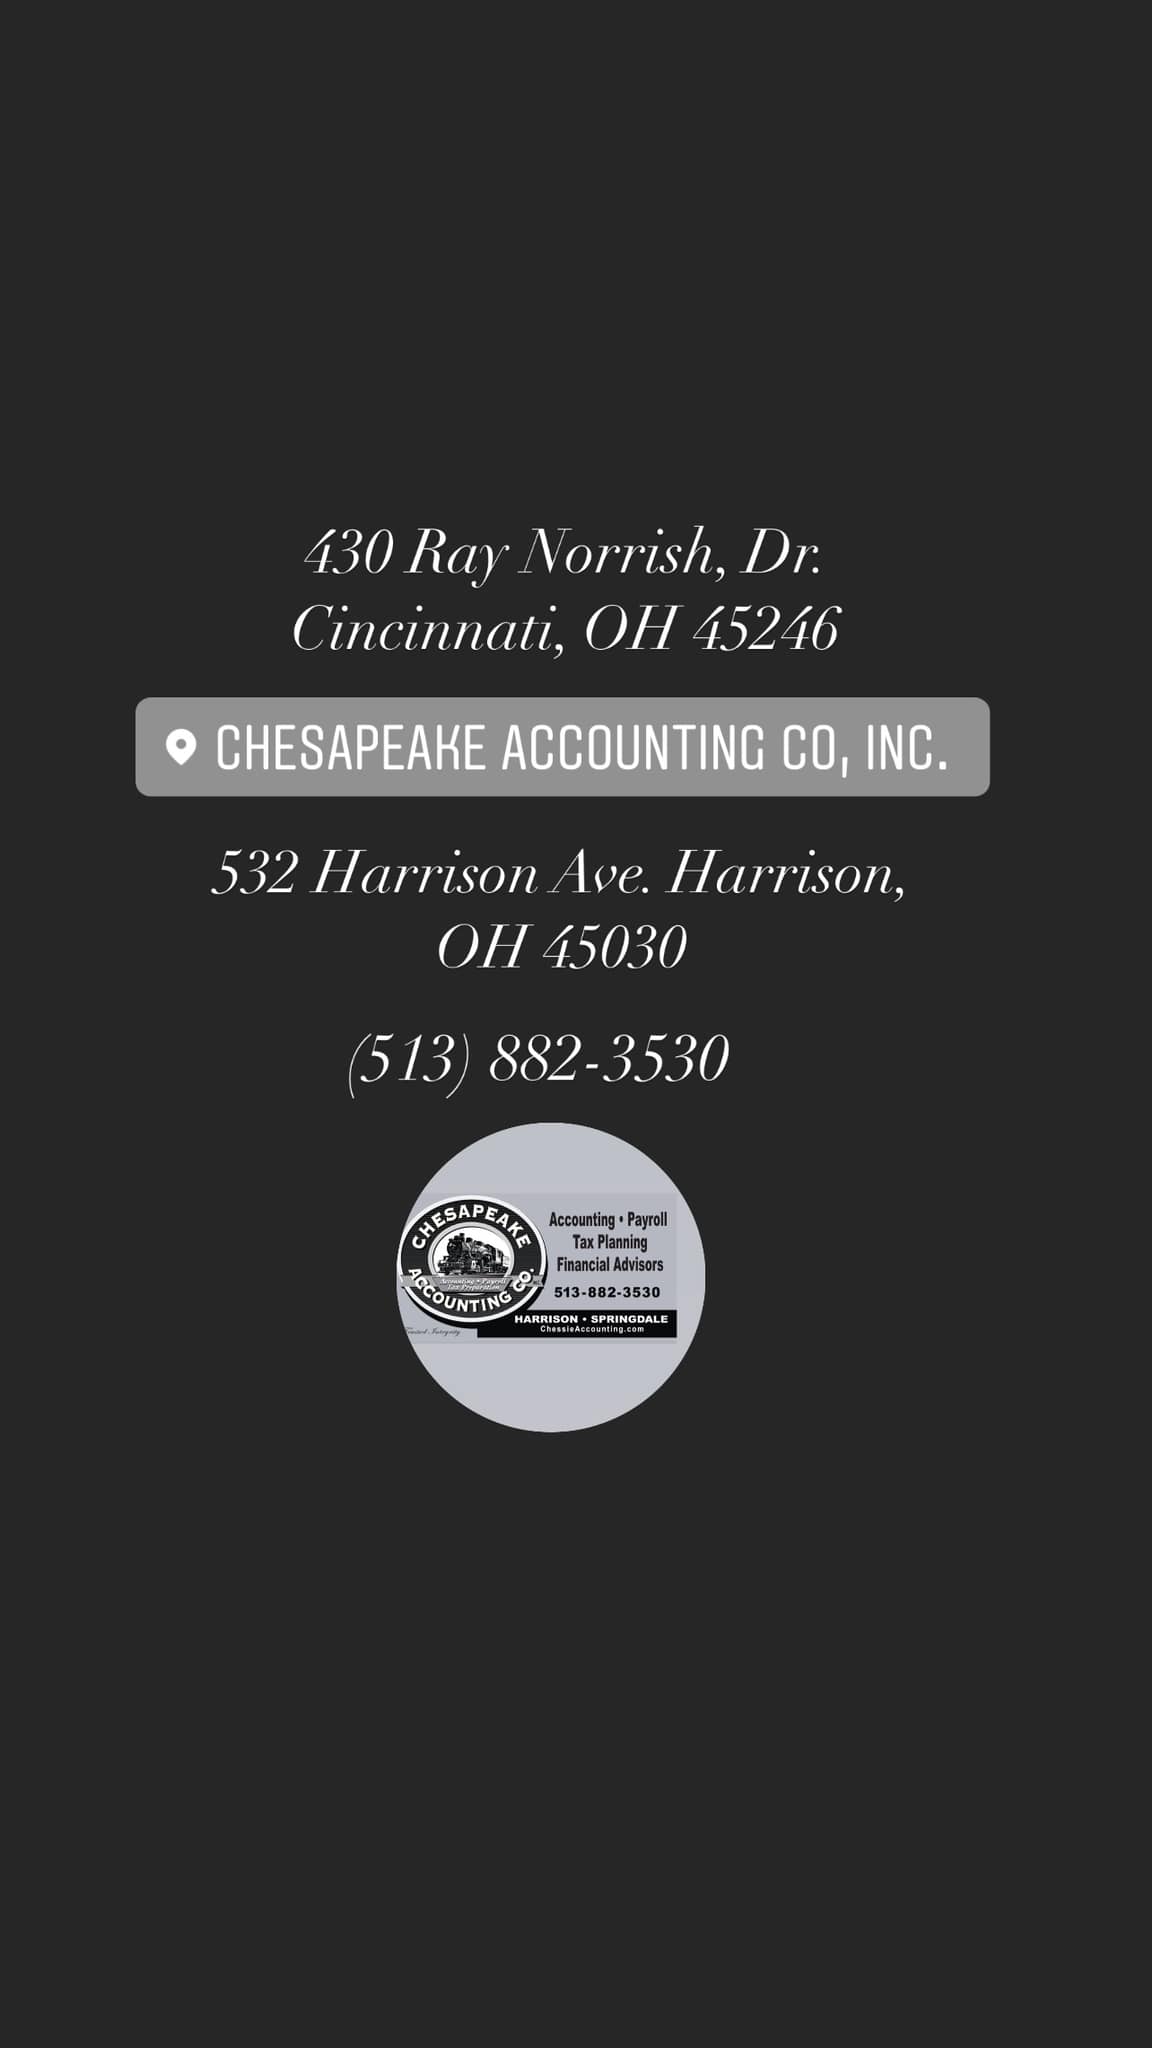 Chesapeake Accounting Co. 430 Ray Norrish Dr, Springdale Ohio 45246